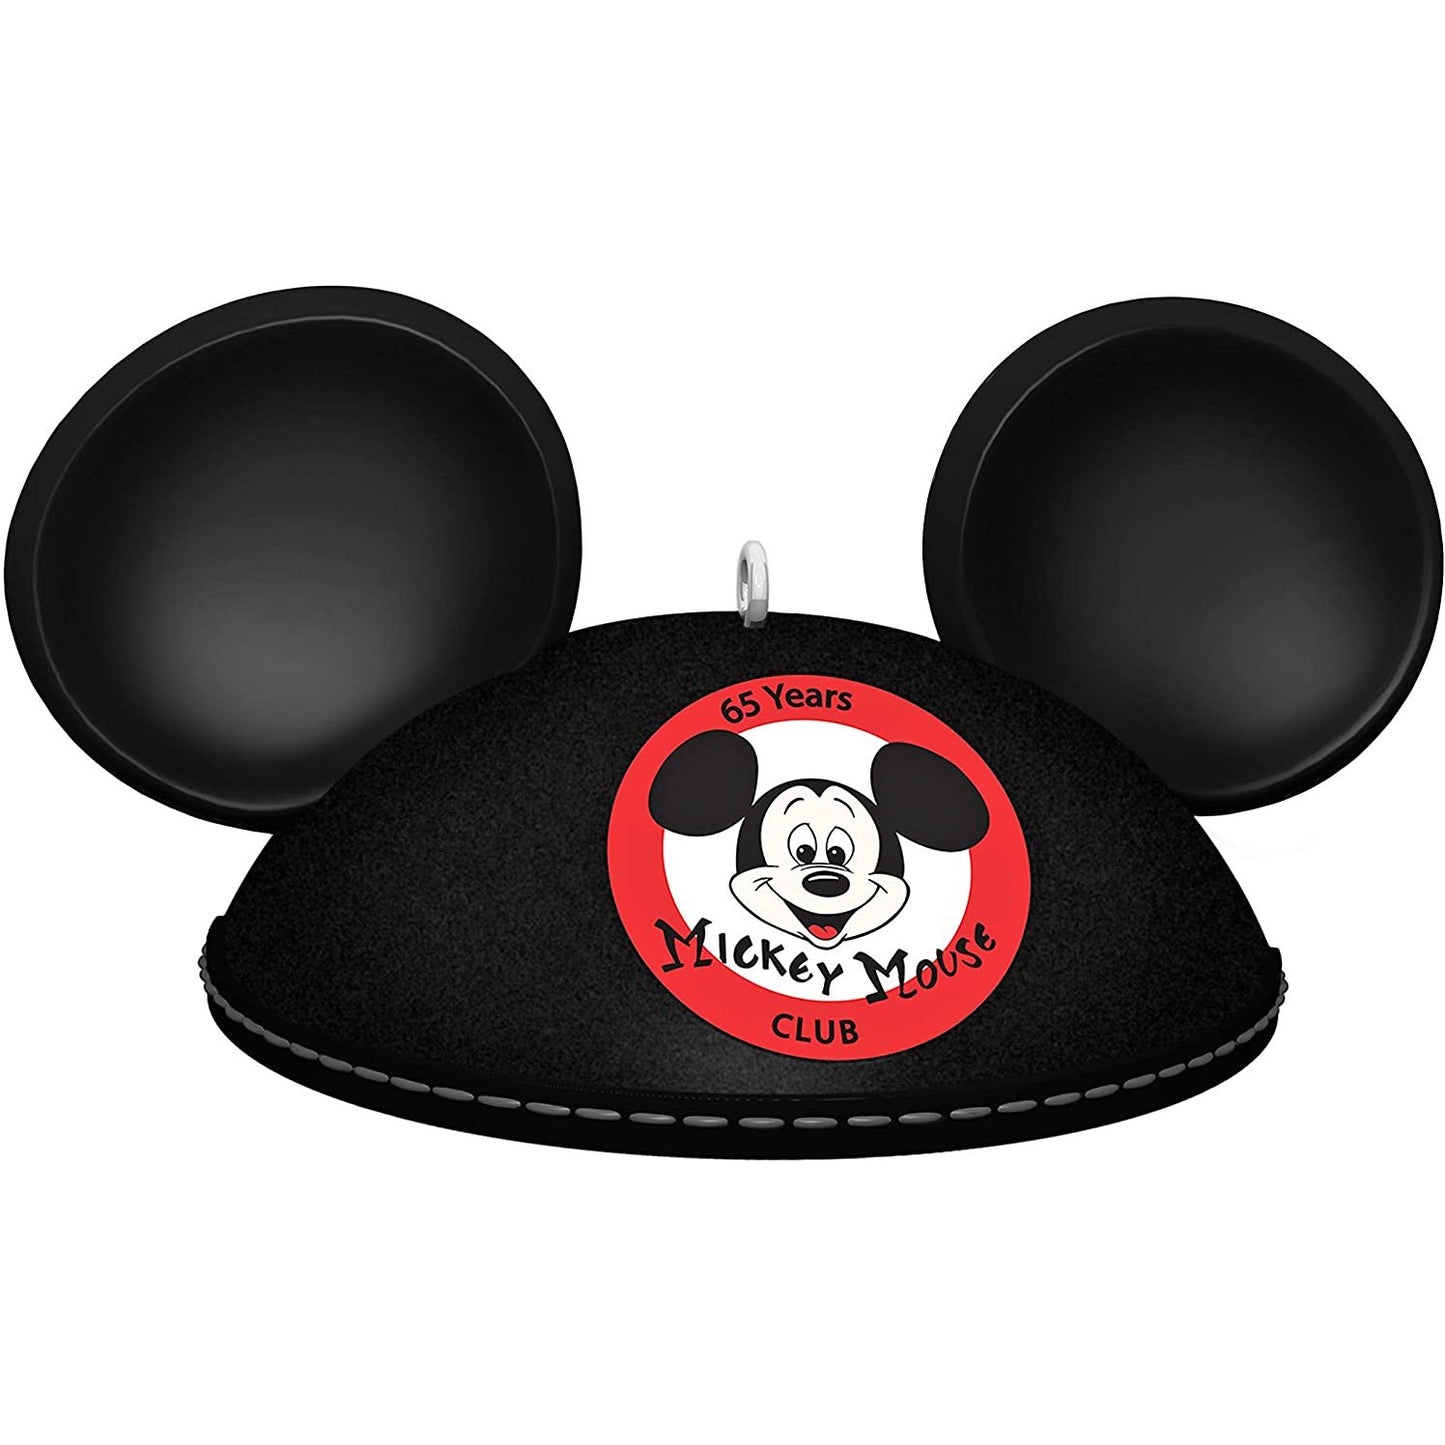 Hallmark Keepsake Christmas Ornament 2020, Disney The Mickey Mouse Club 65th Anniversary, Musical